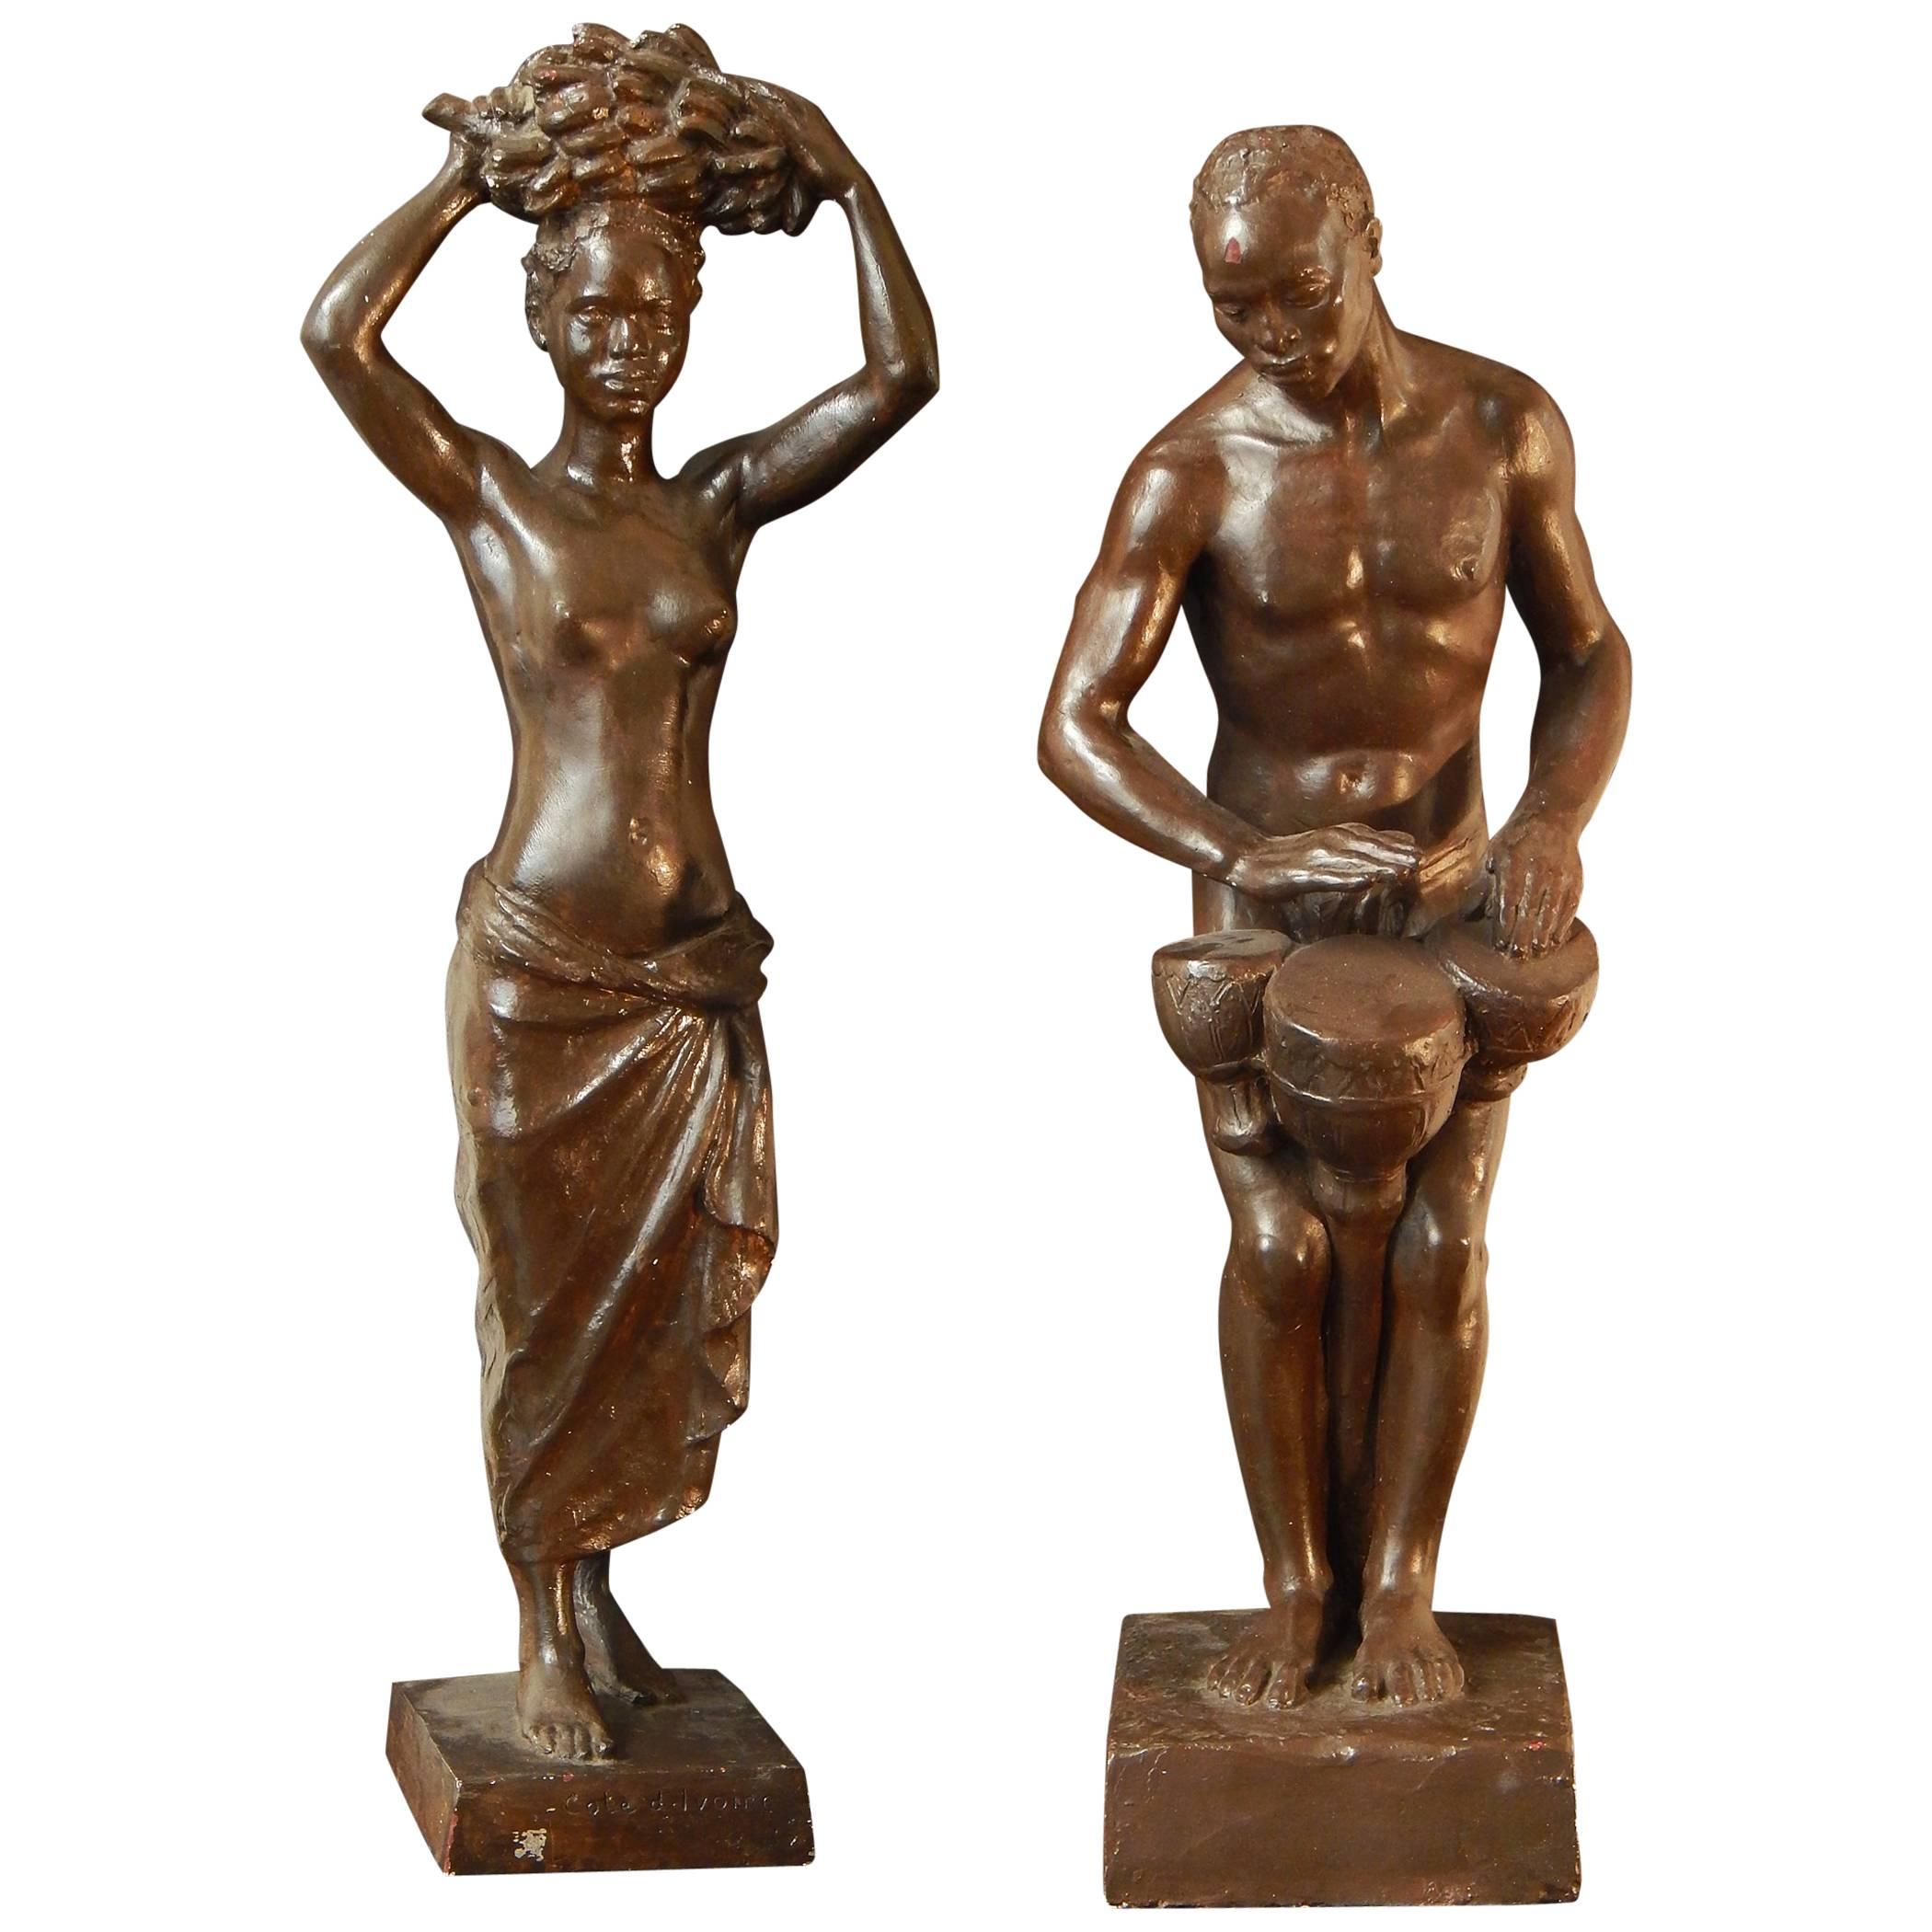 "Ivory Coast Figures", Important Art Deco Sculptures for Eugène Printz Interior For Sale